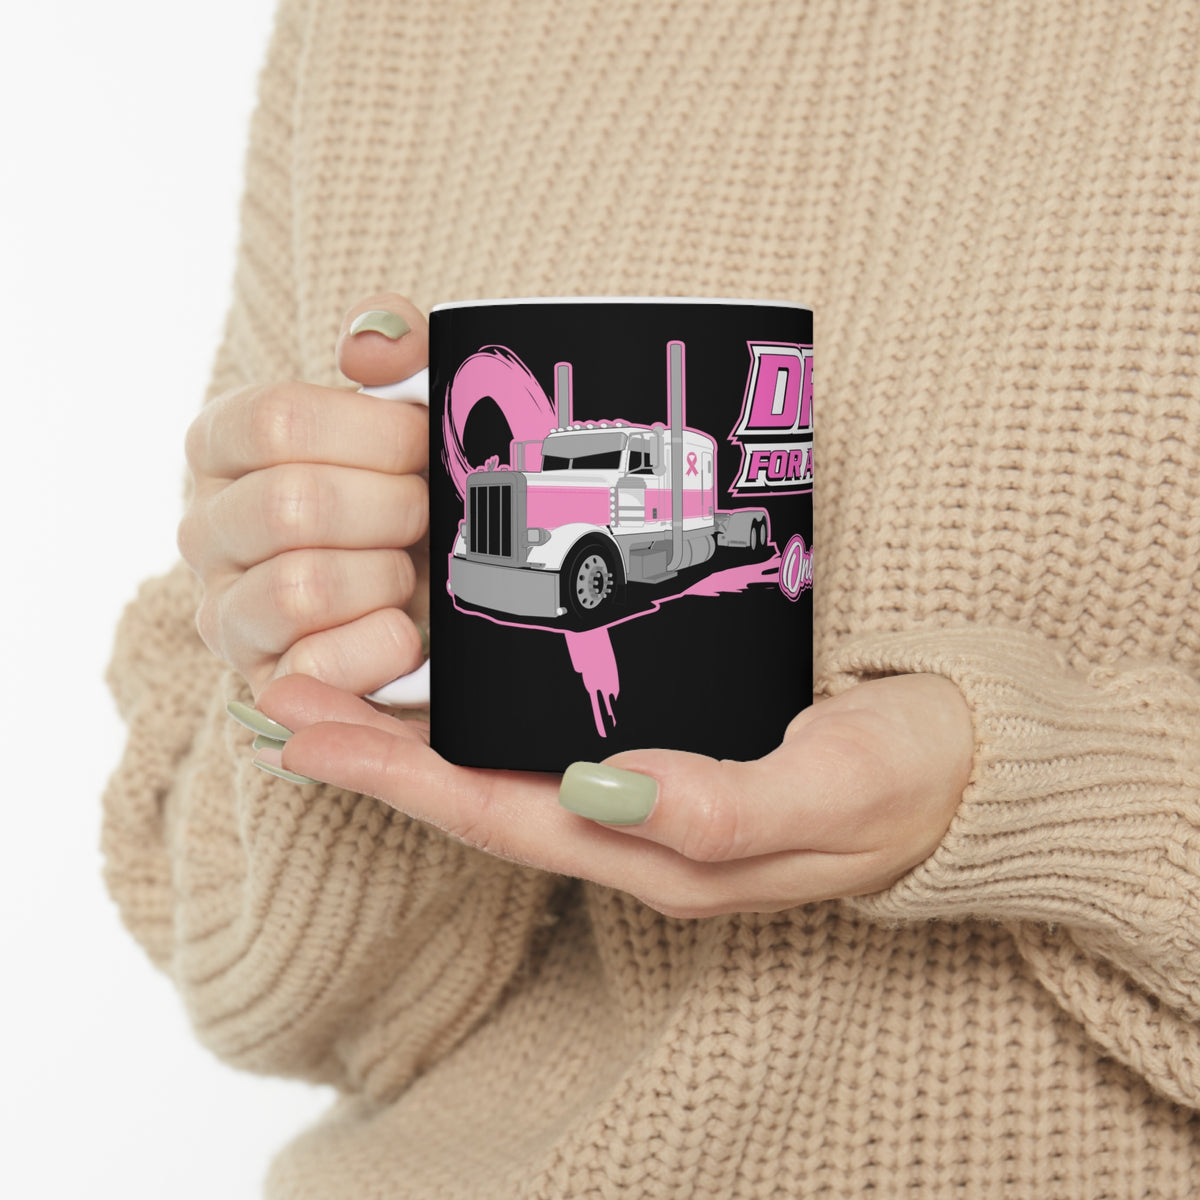 Breast Cancer - Drivin' for a Cure - Peterbilt - Ceramic Mug 11oz